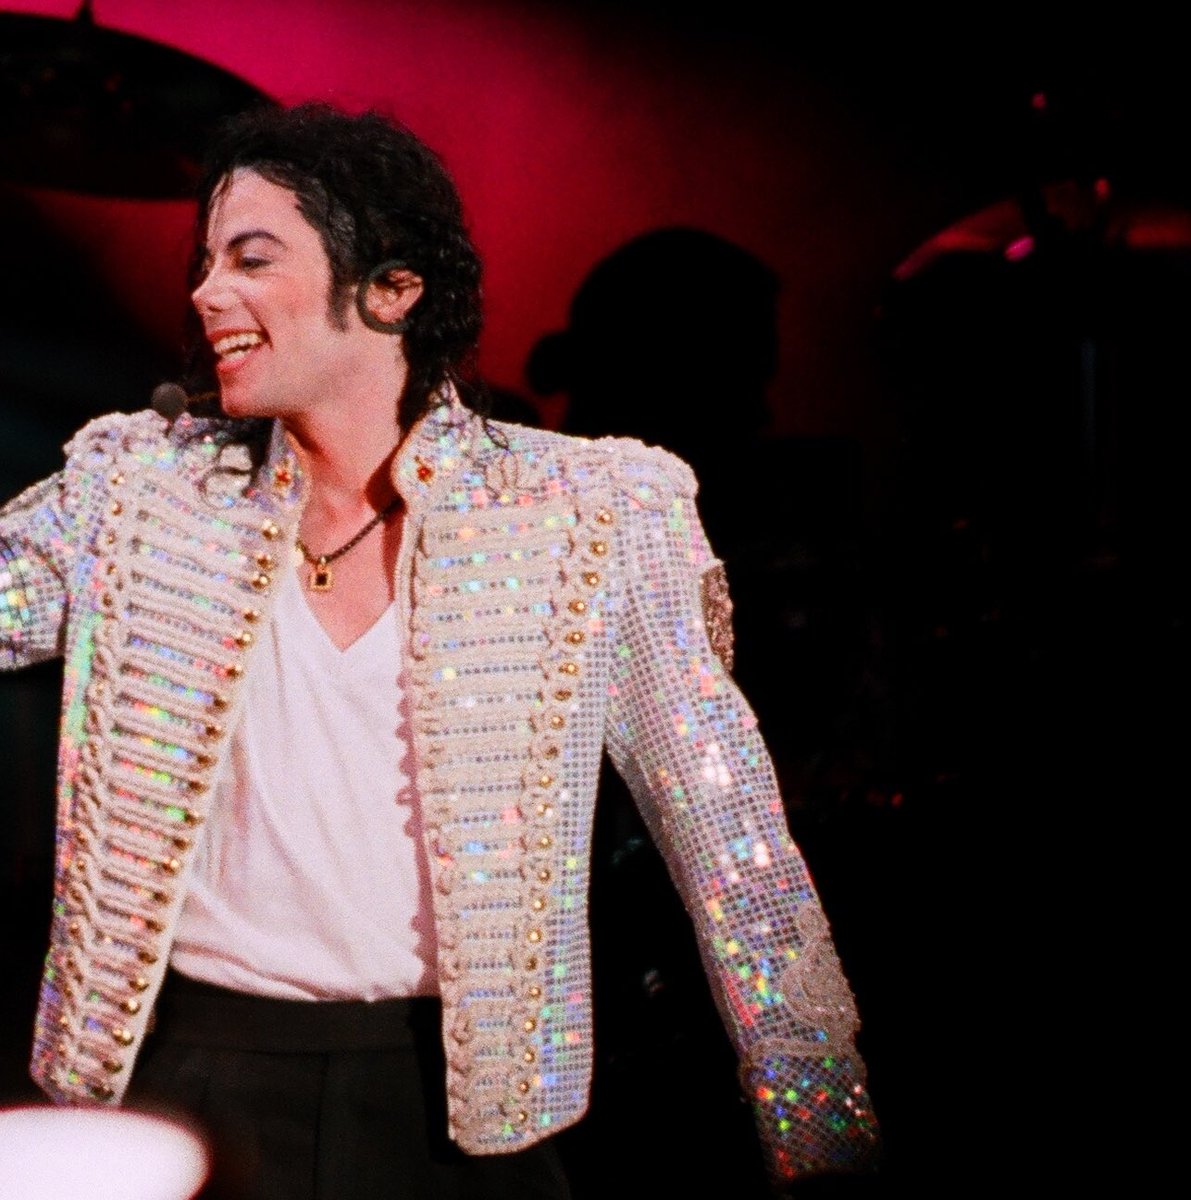 Michael Jackson Photo: michael jackson necklace | Michael jackson  merchandise, Michael jackson, Michael jackson art